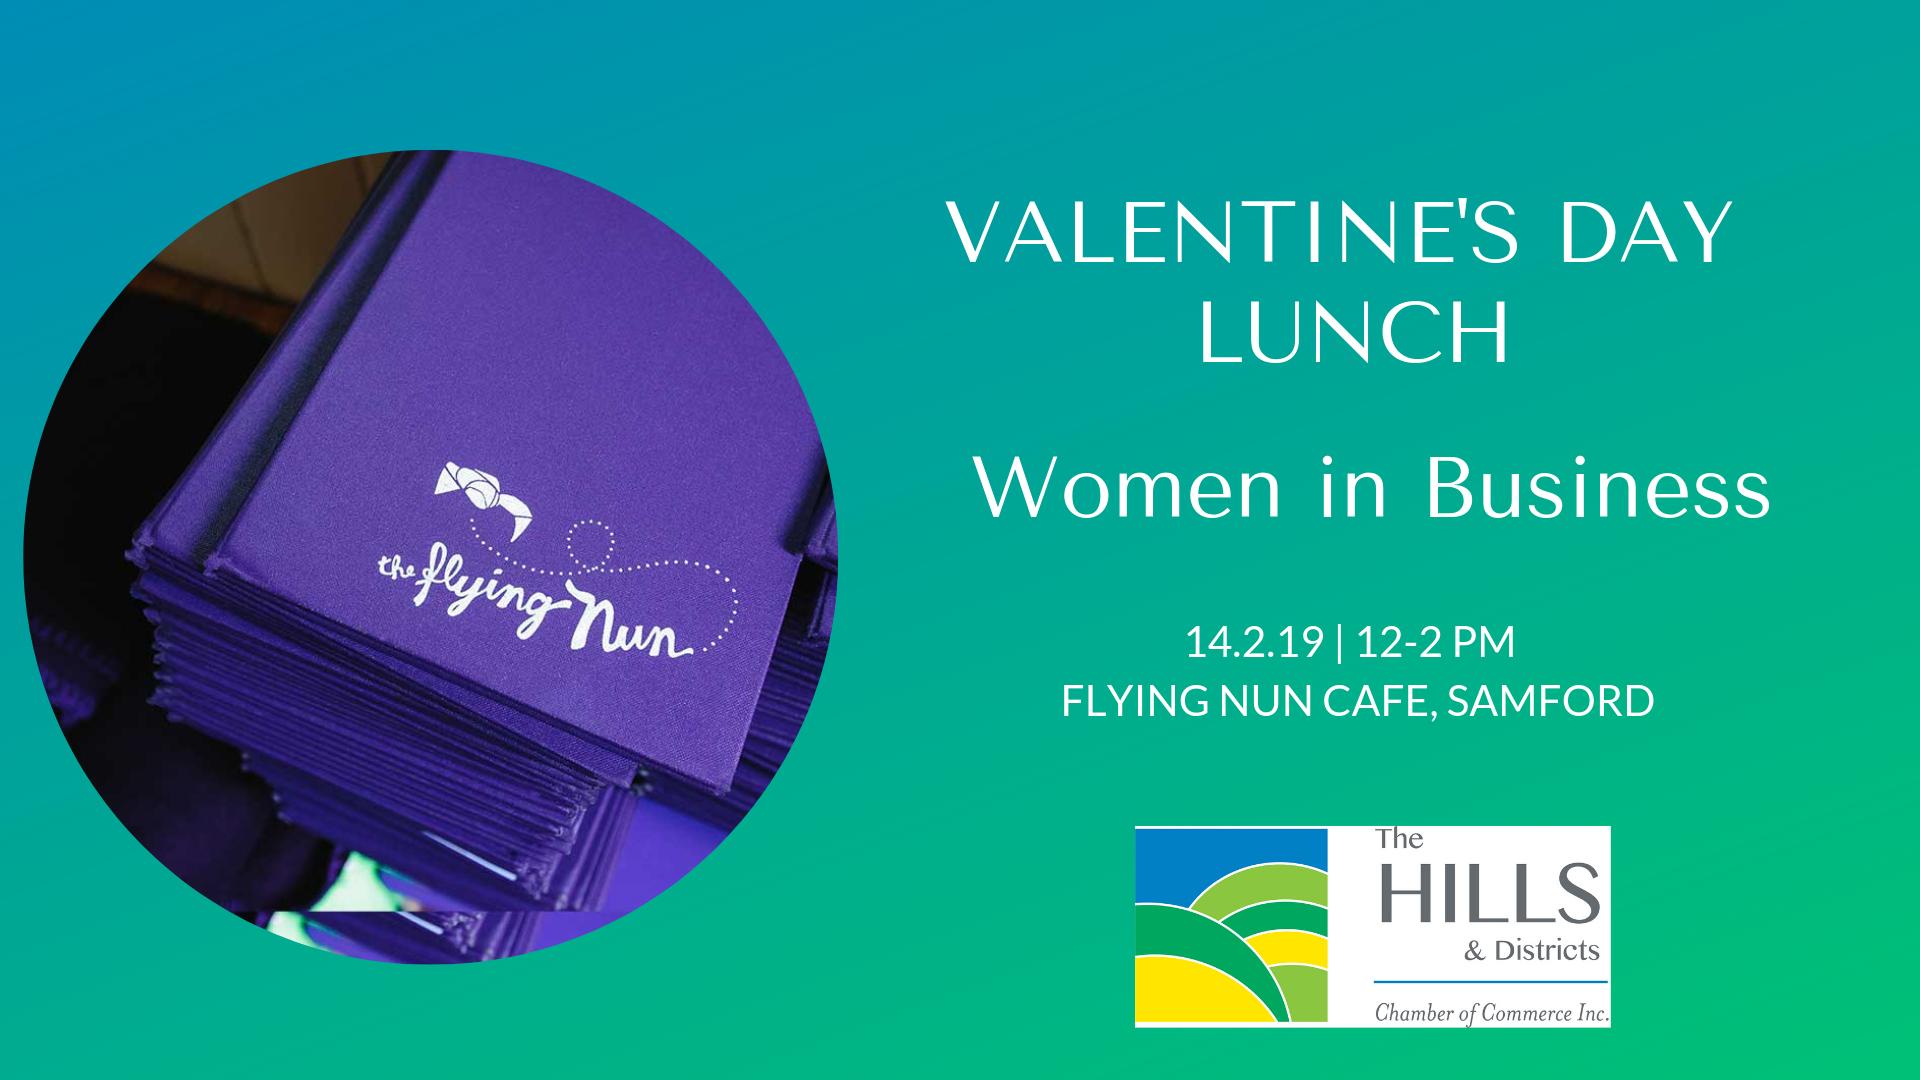 Women in Business » Valentine’s Day Lunch